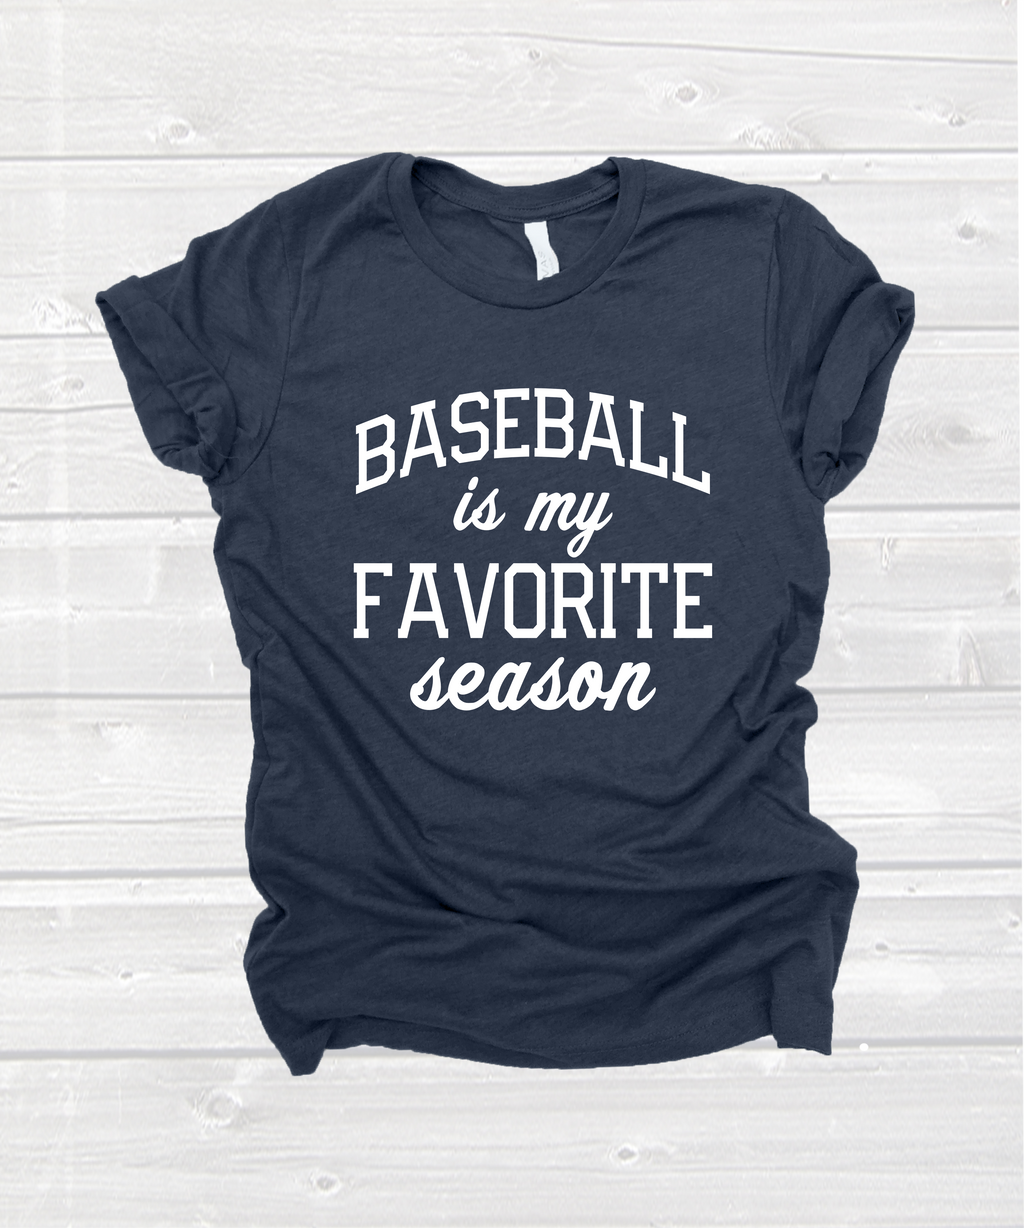 "baseball is my favorite season" tee in heather navy